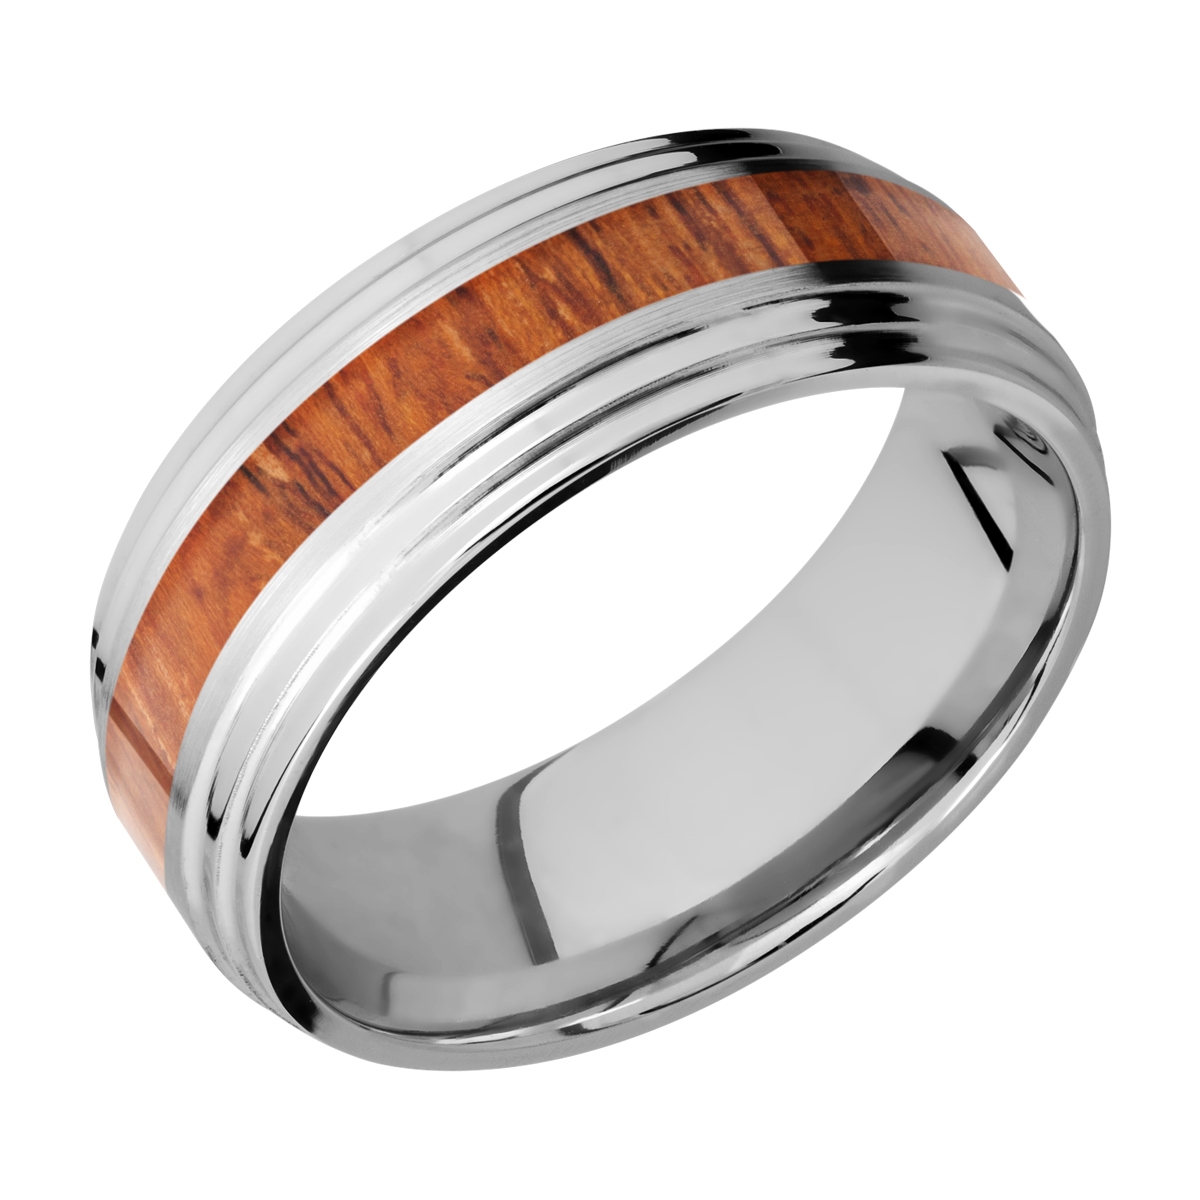 Lashbrook CC8F2S13/HARDWOOD Cobalt Chrome Wedding Ring or Band